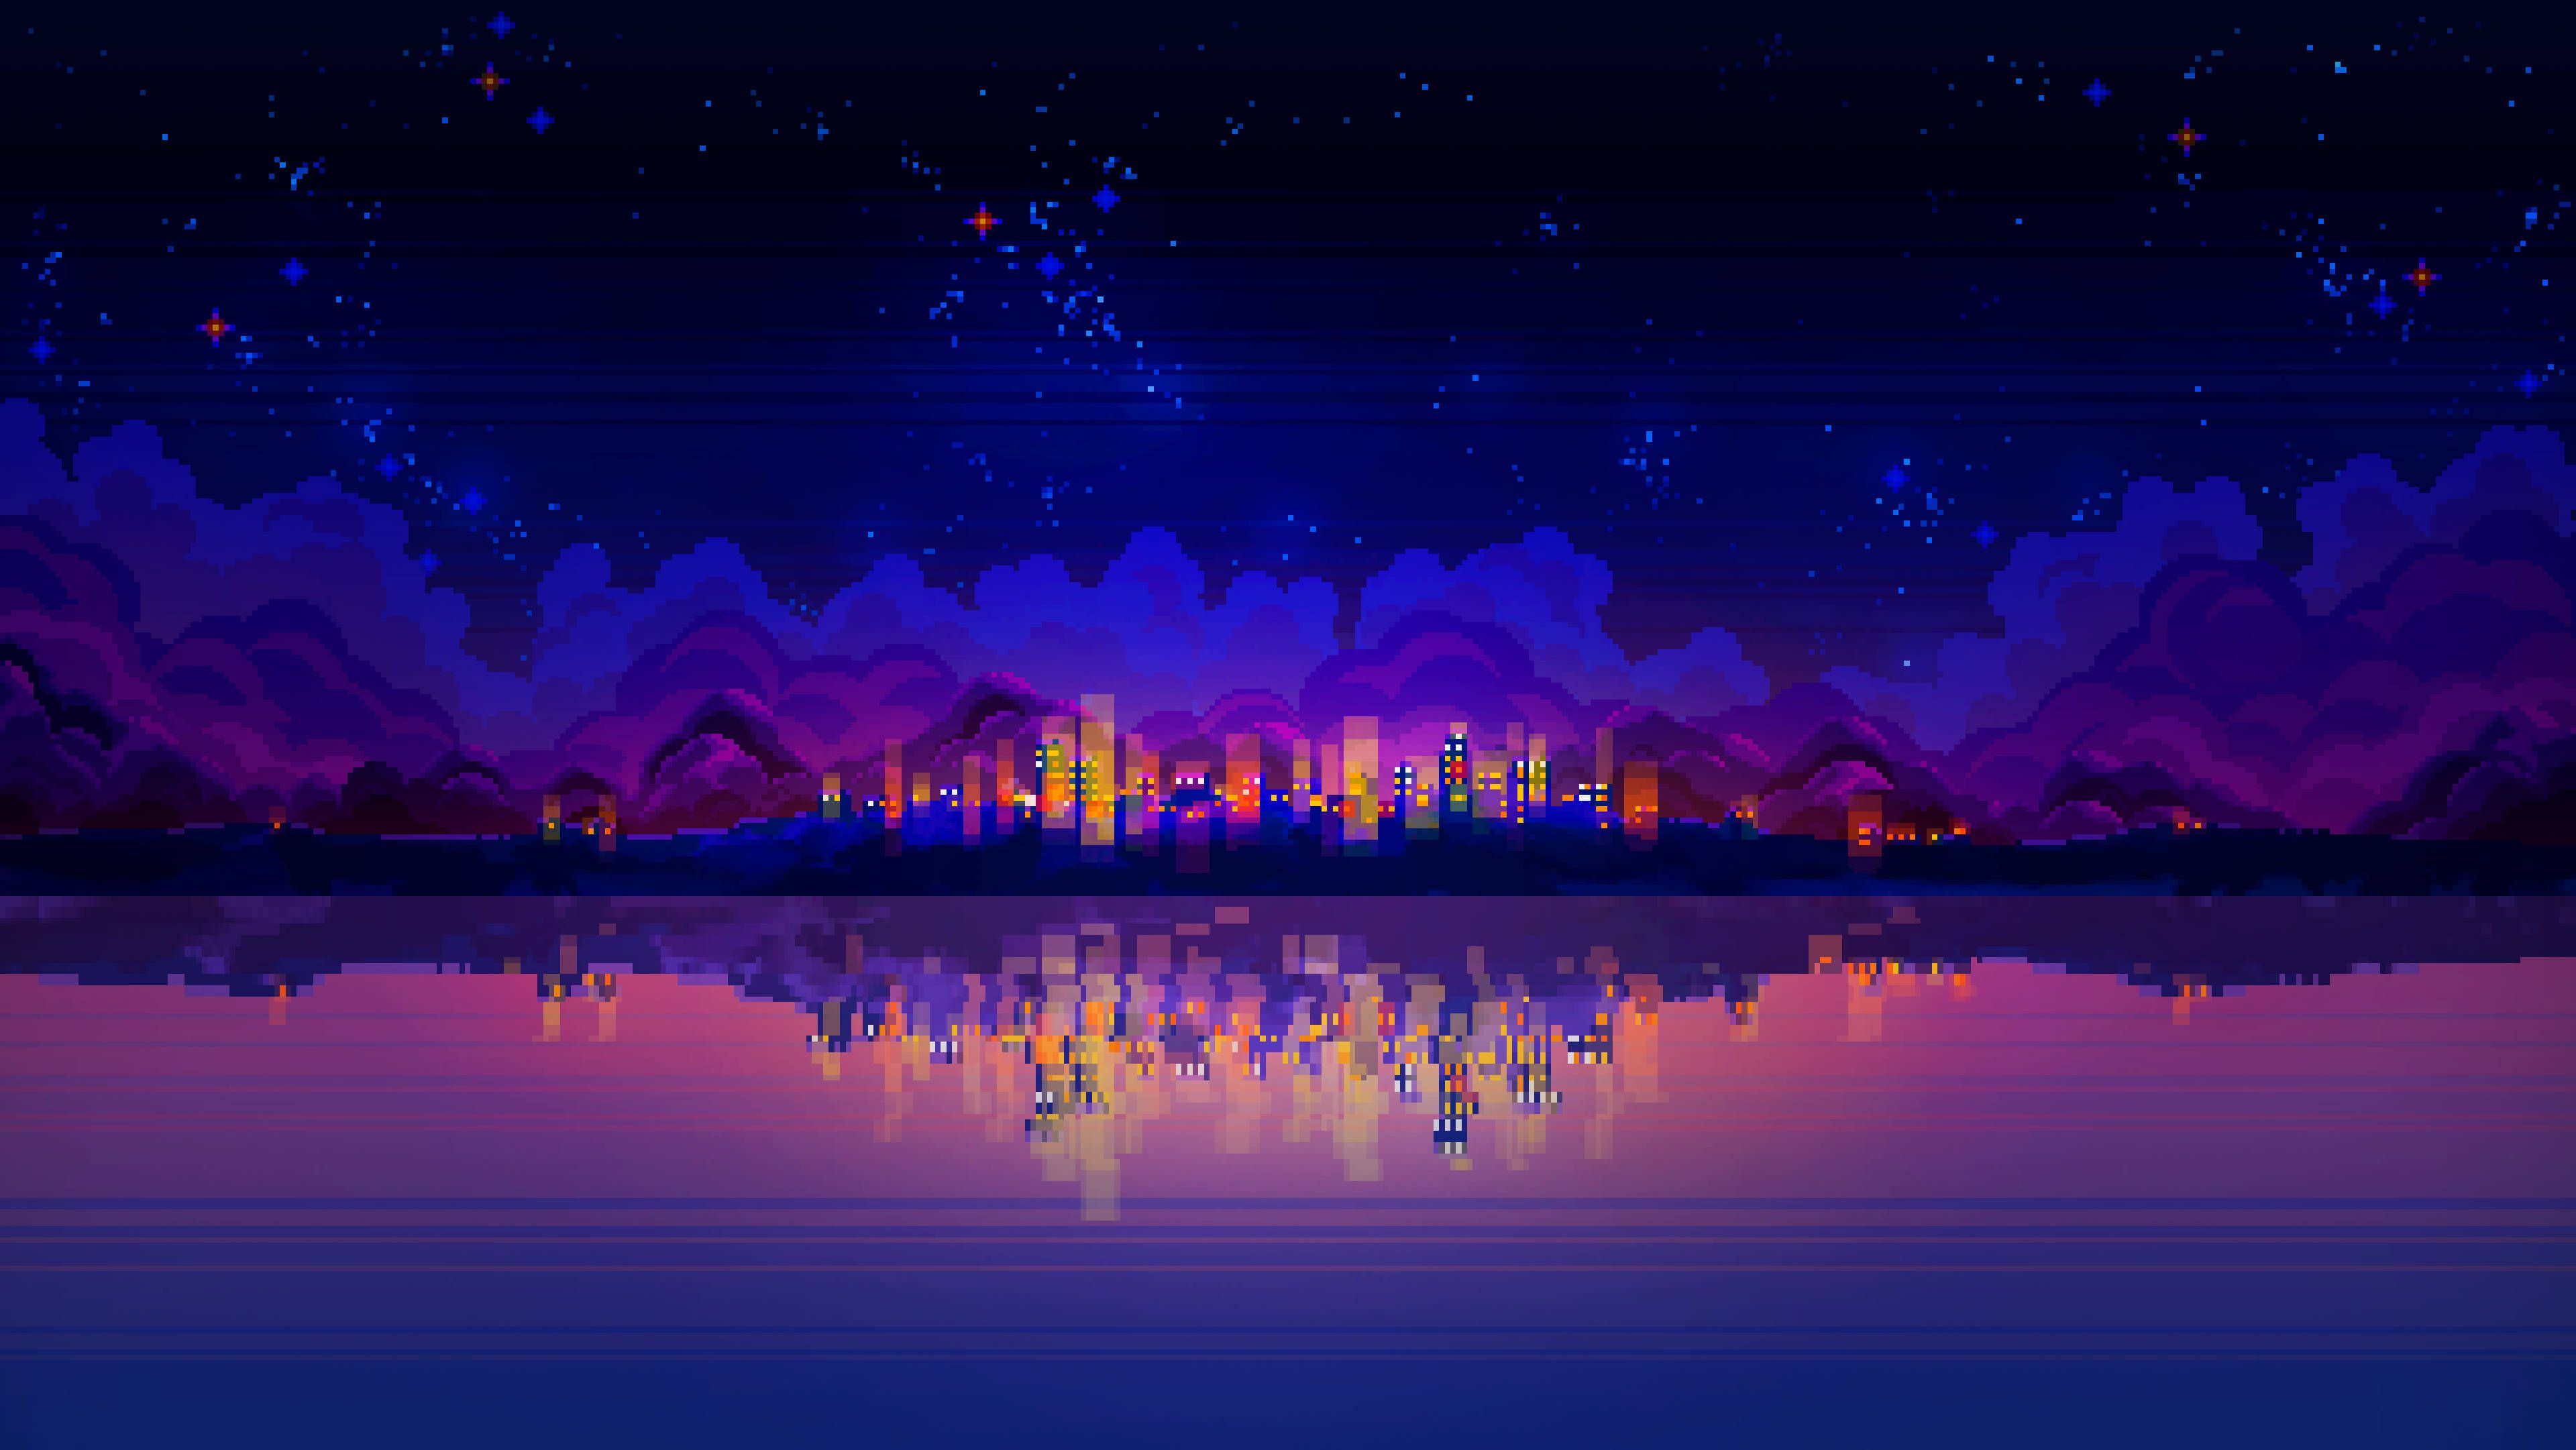 Pixel wallpaper of a city at night with stars - Pixel art, art, river